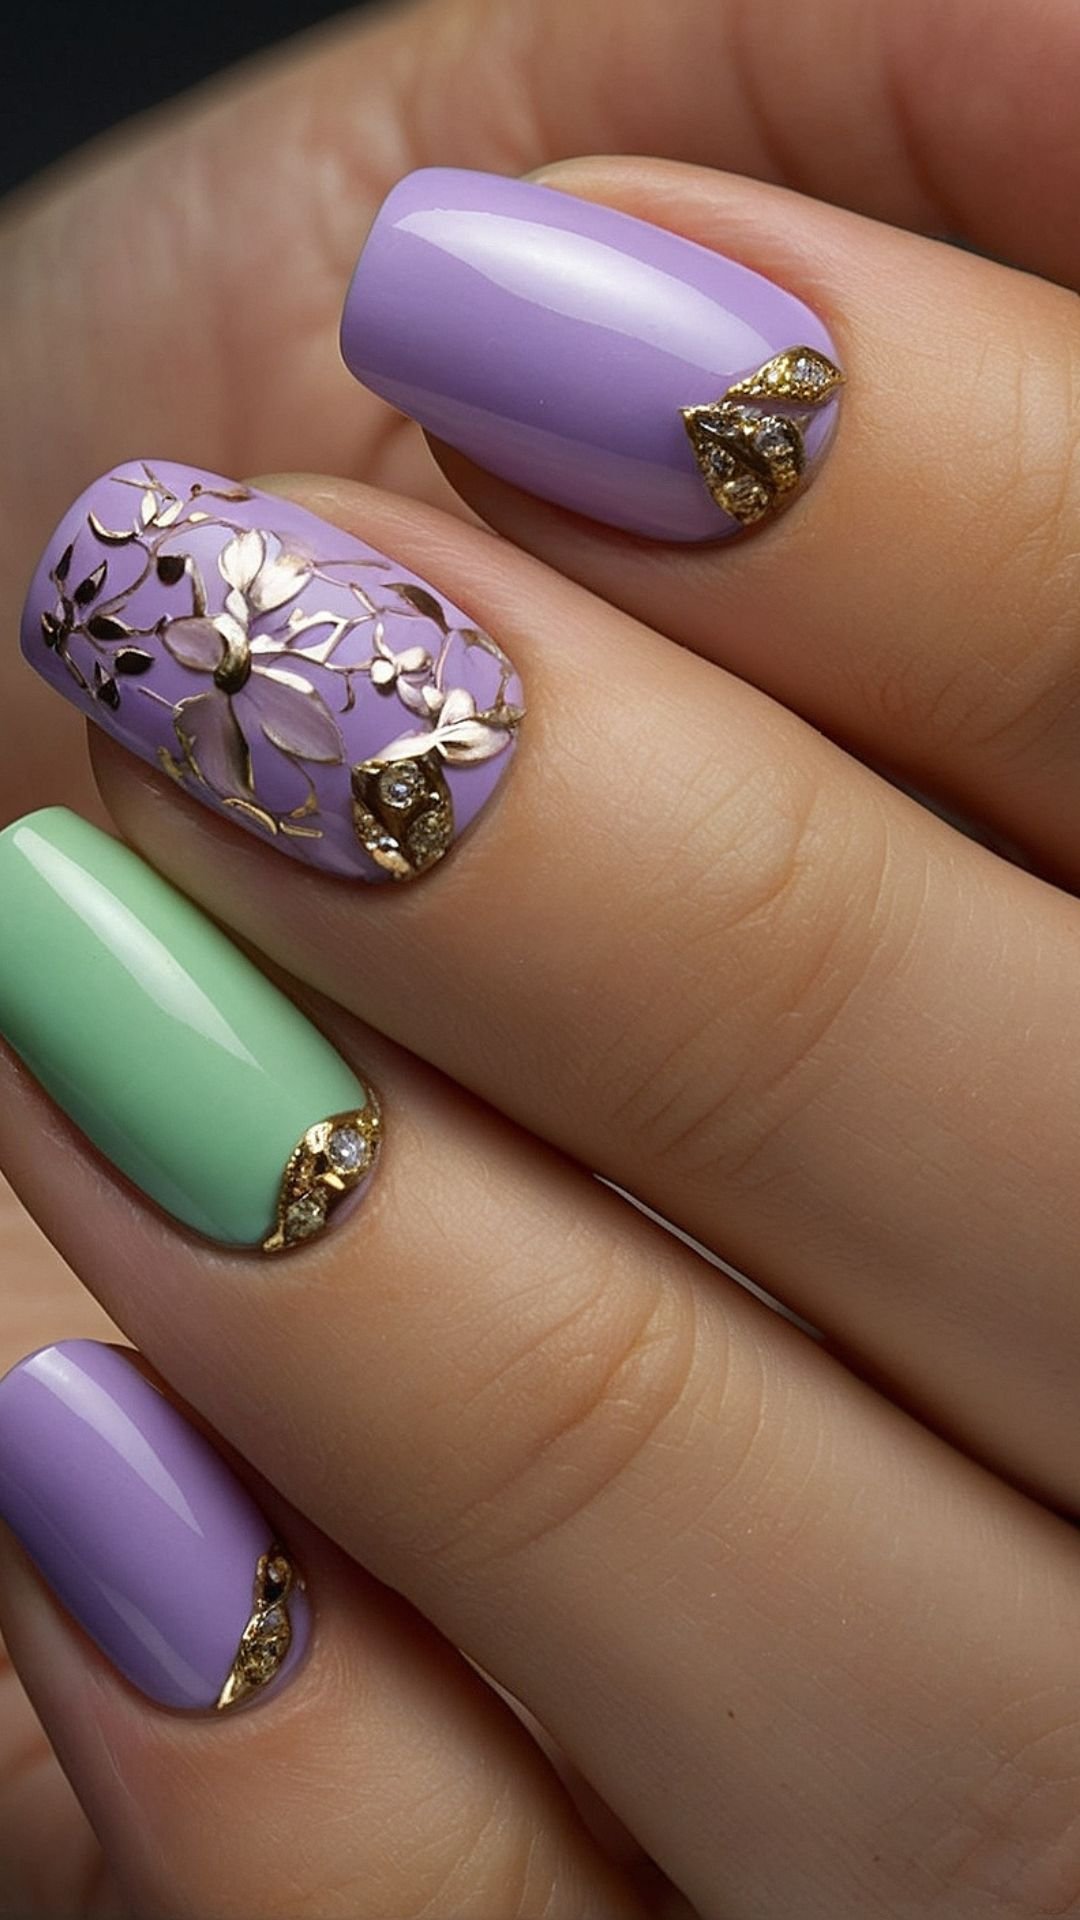 Lilac Luxury